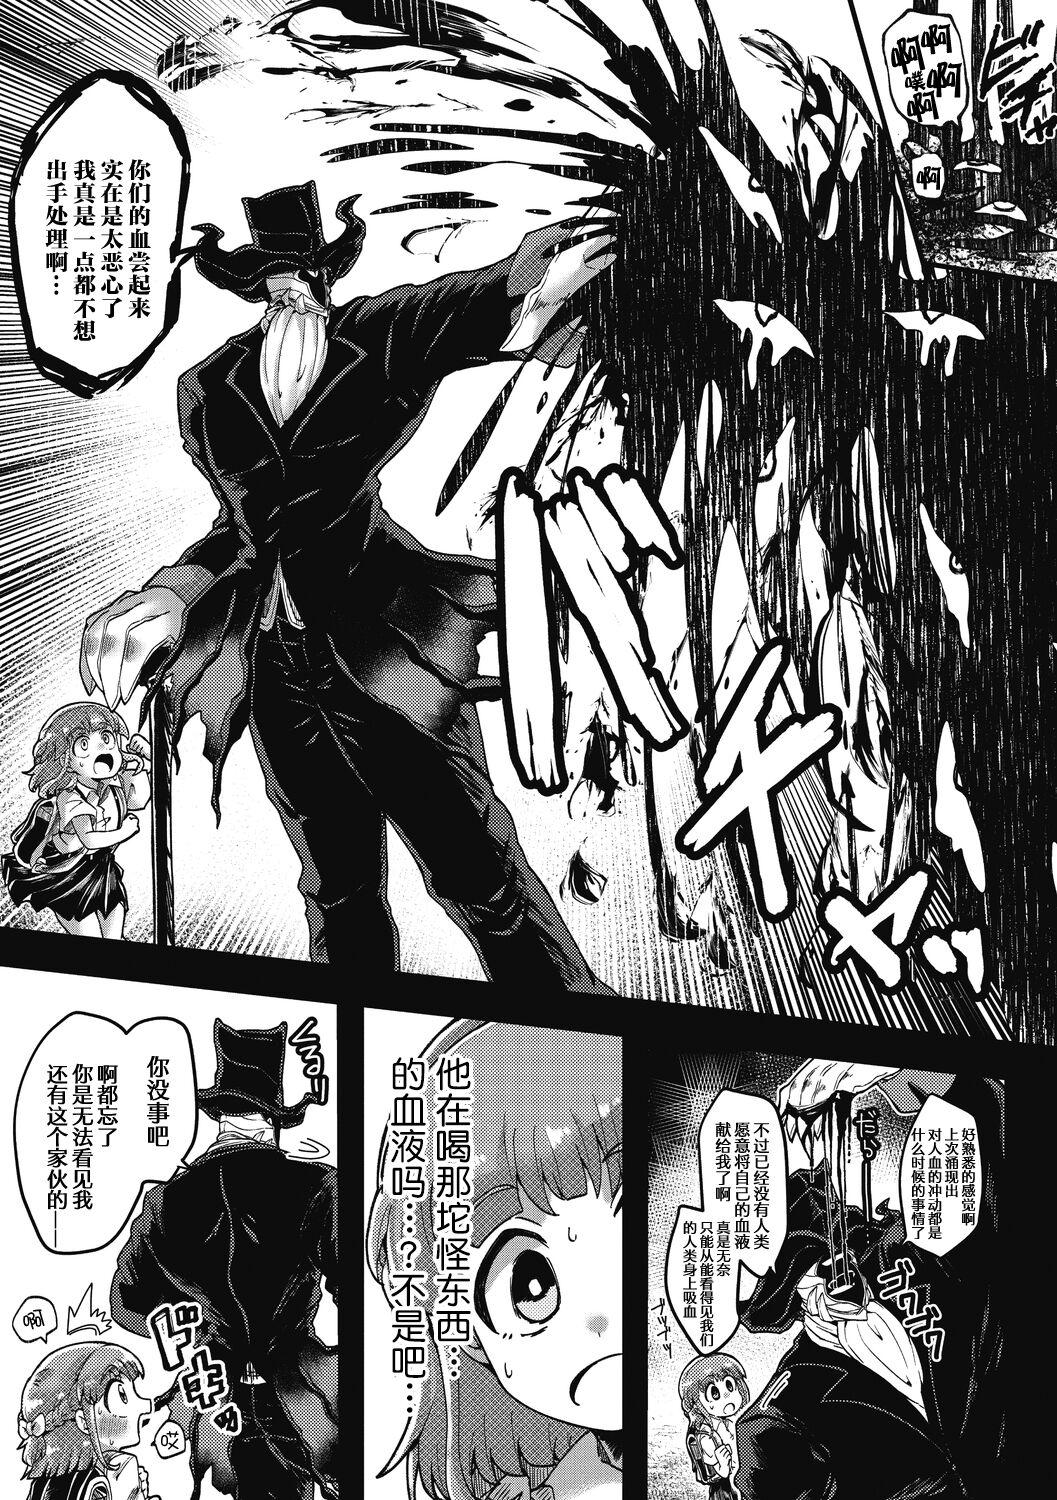 Gostoso Watashi no Homme Fatale Asians - Page 3